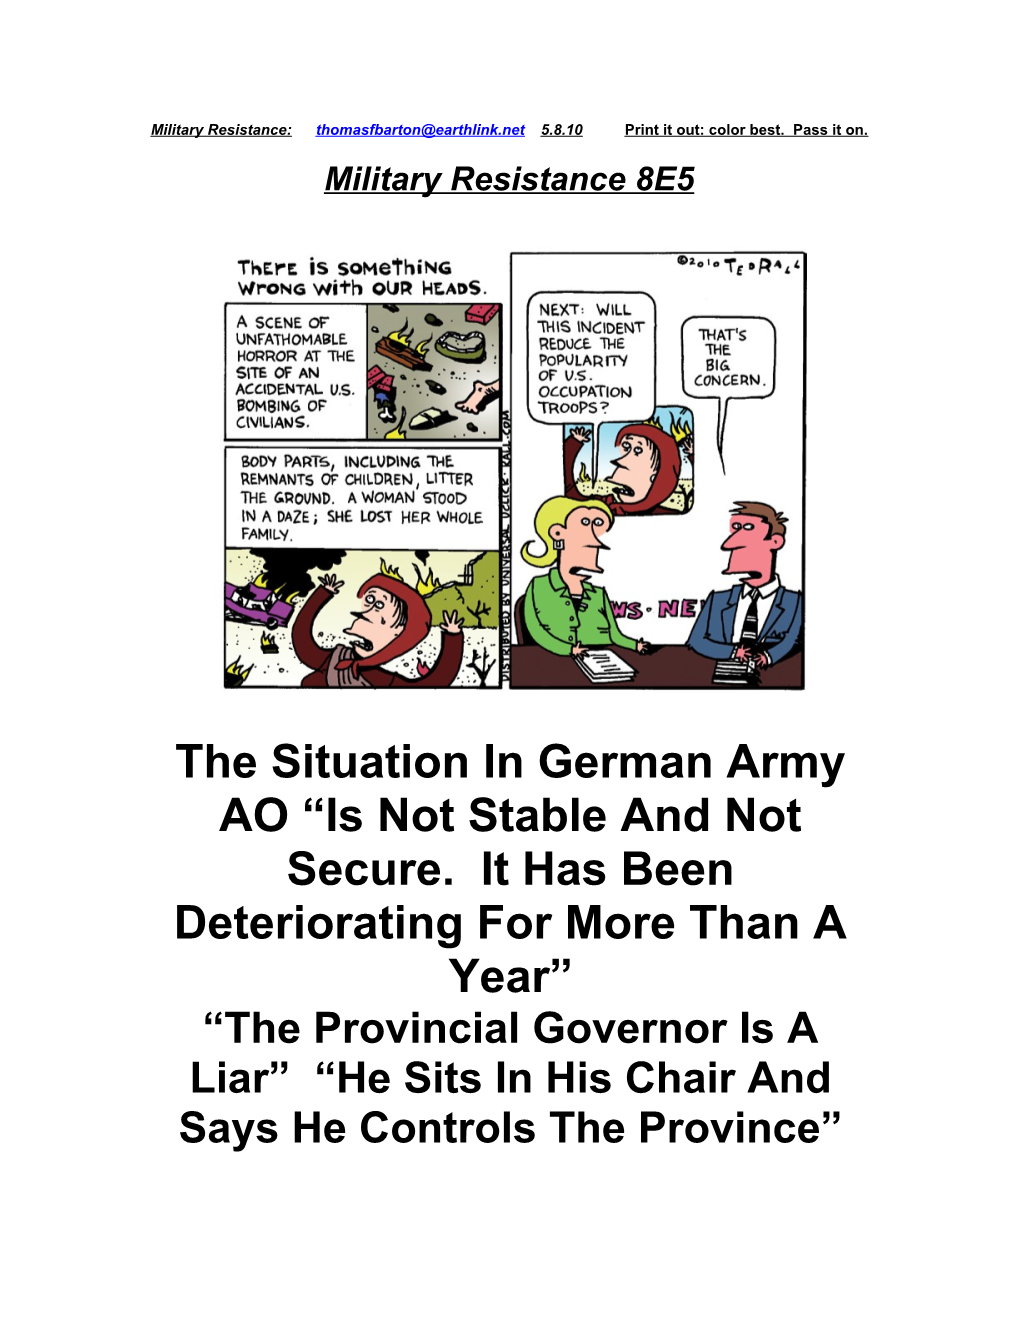 Military Resistance 8E5